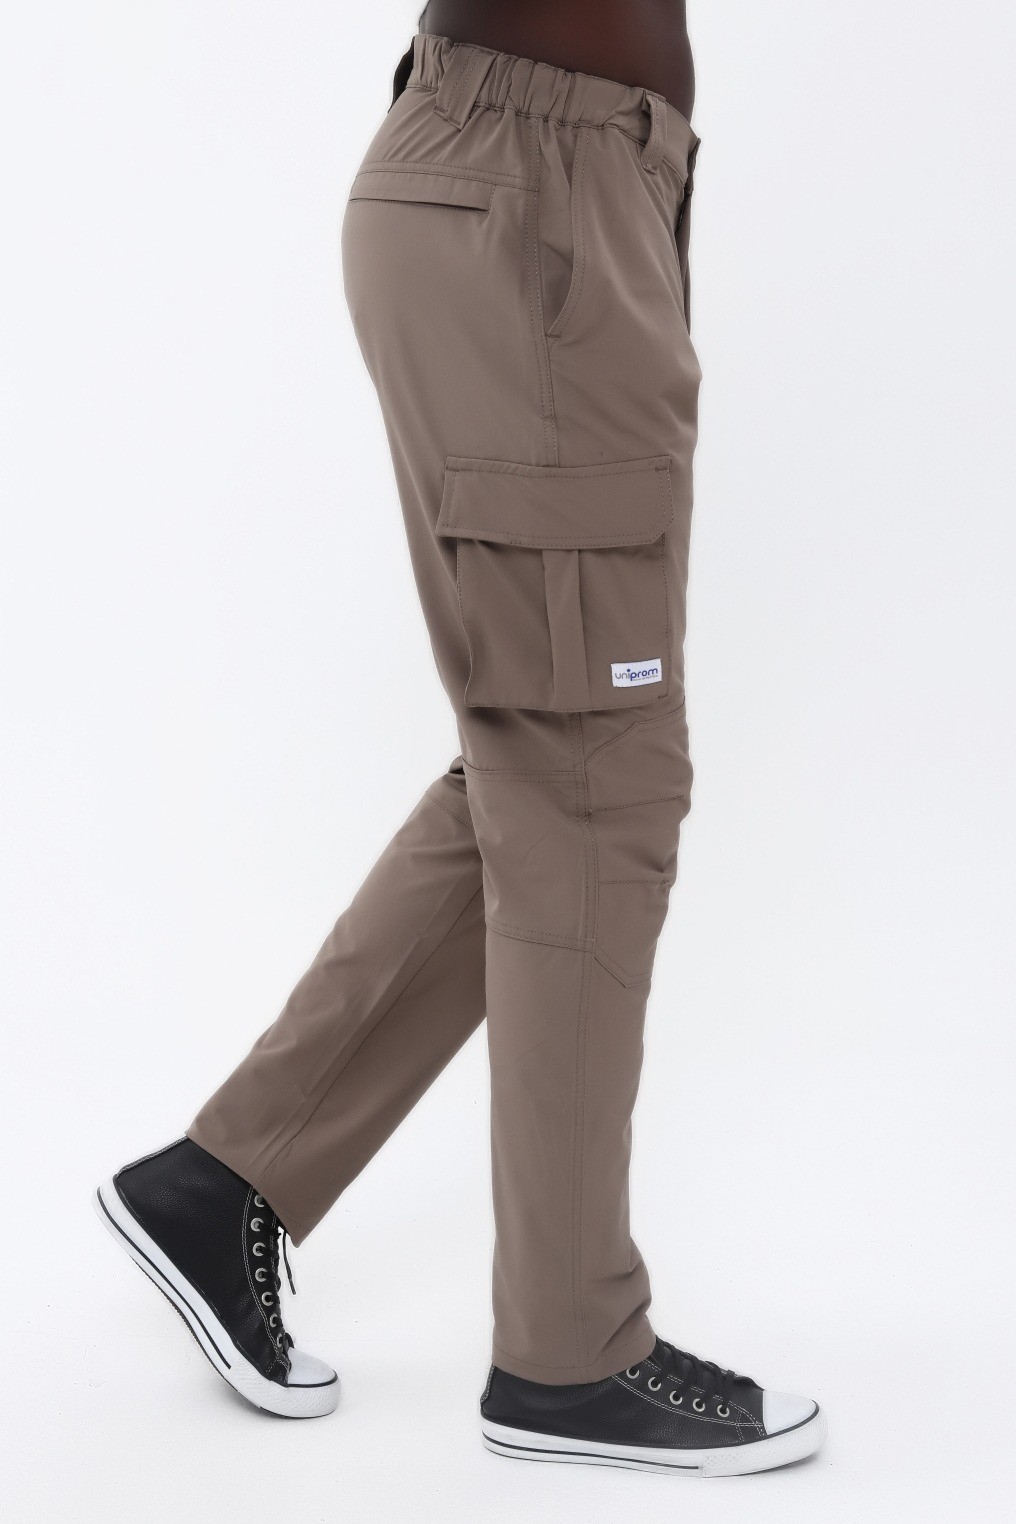 Uniprom Tactical Pantolon Solar Model Likralı Outdoor 7 Cepli Mevsimlik Bej